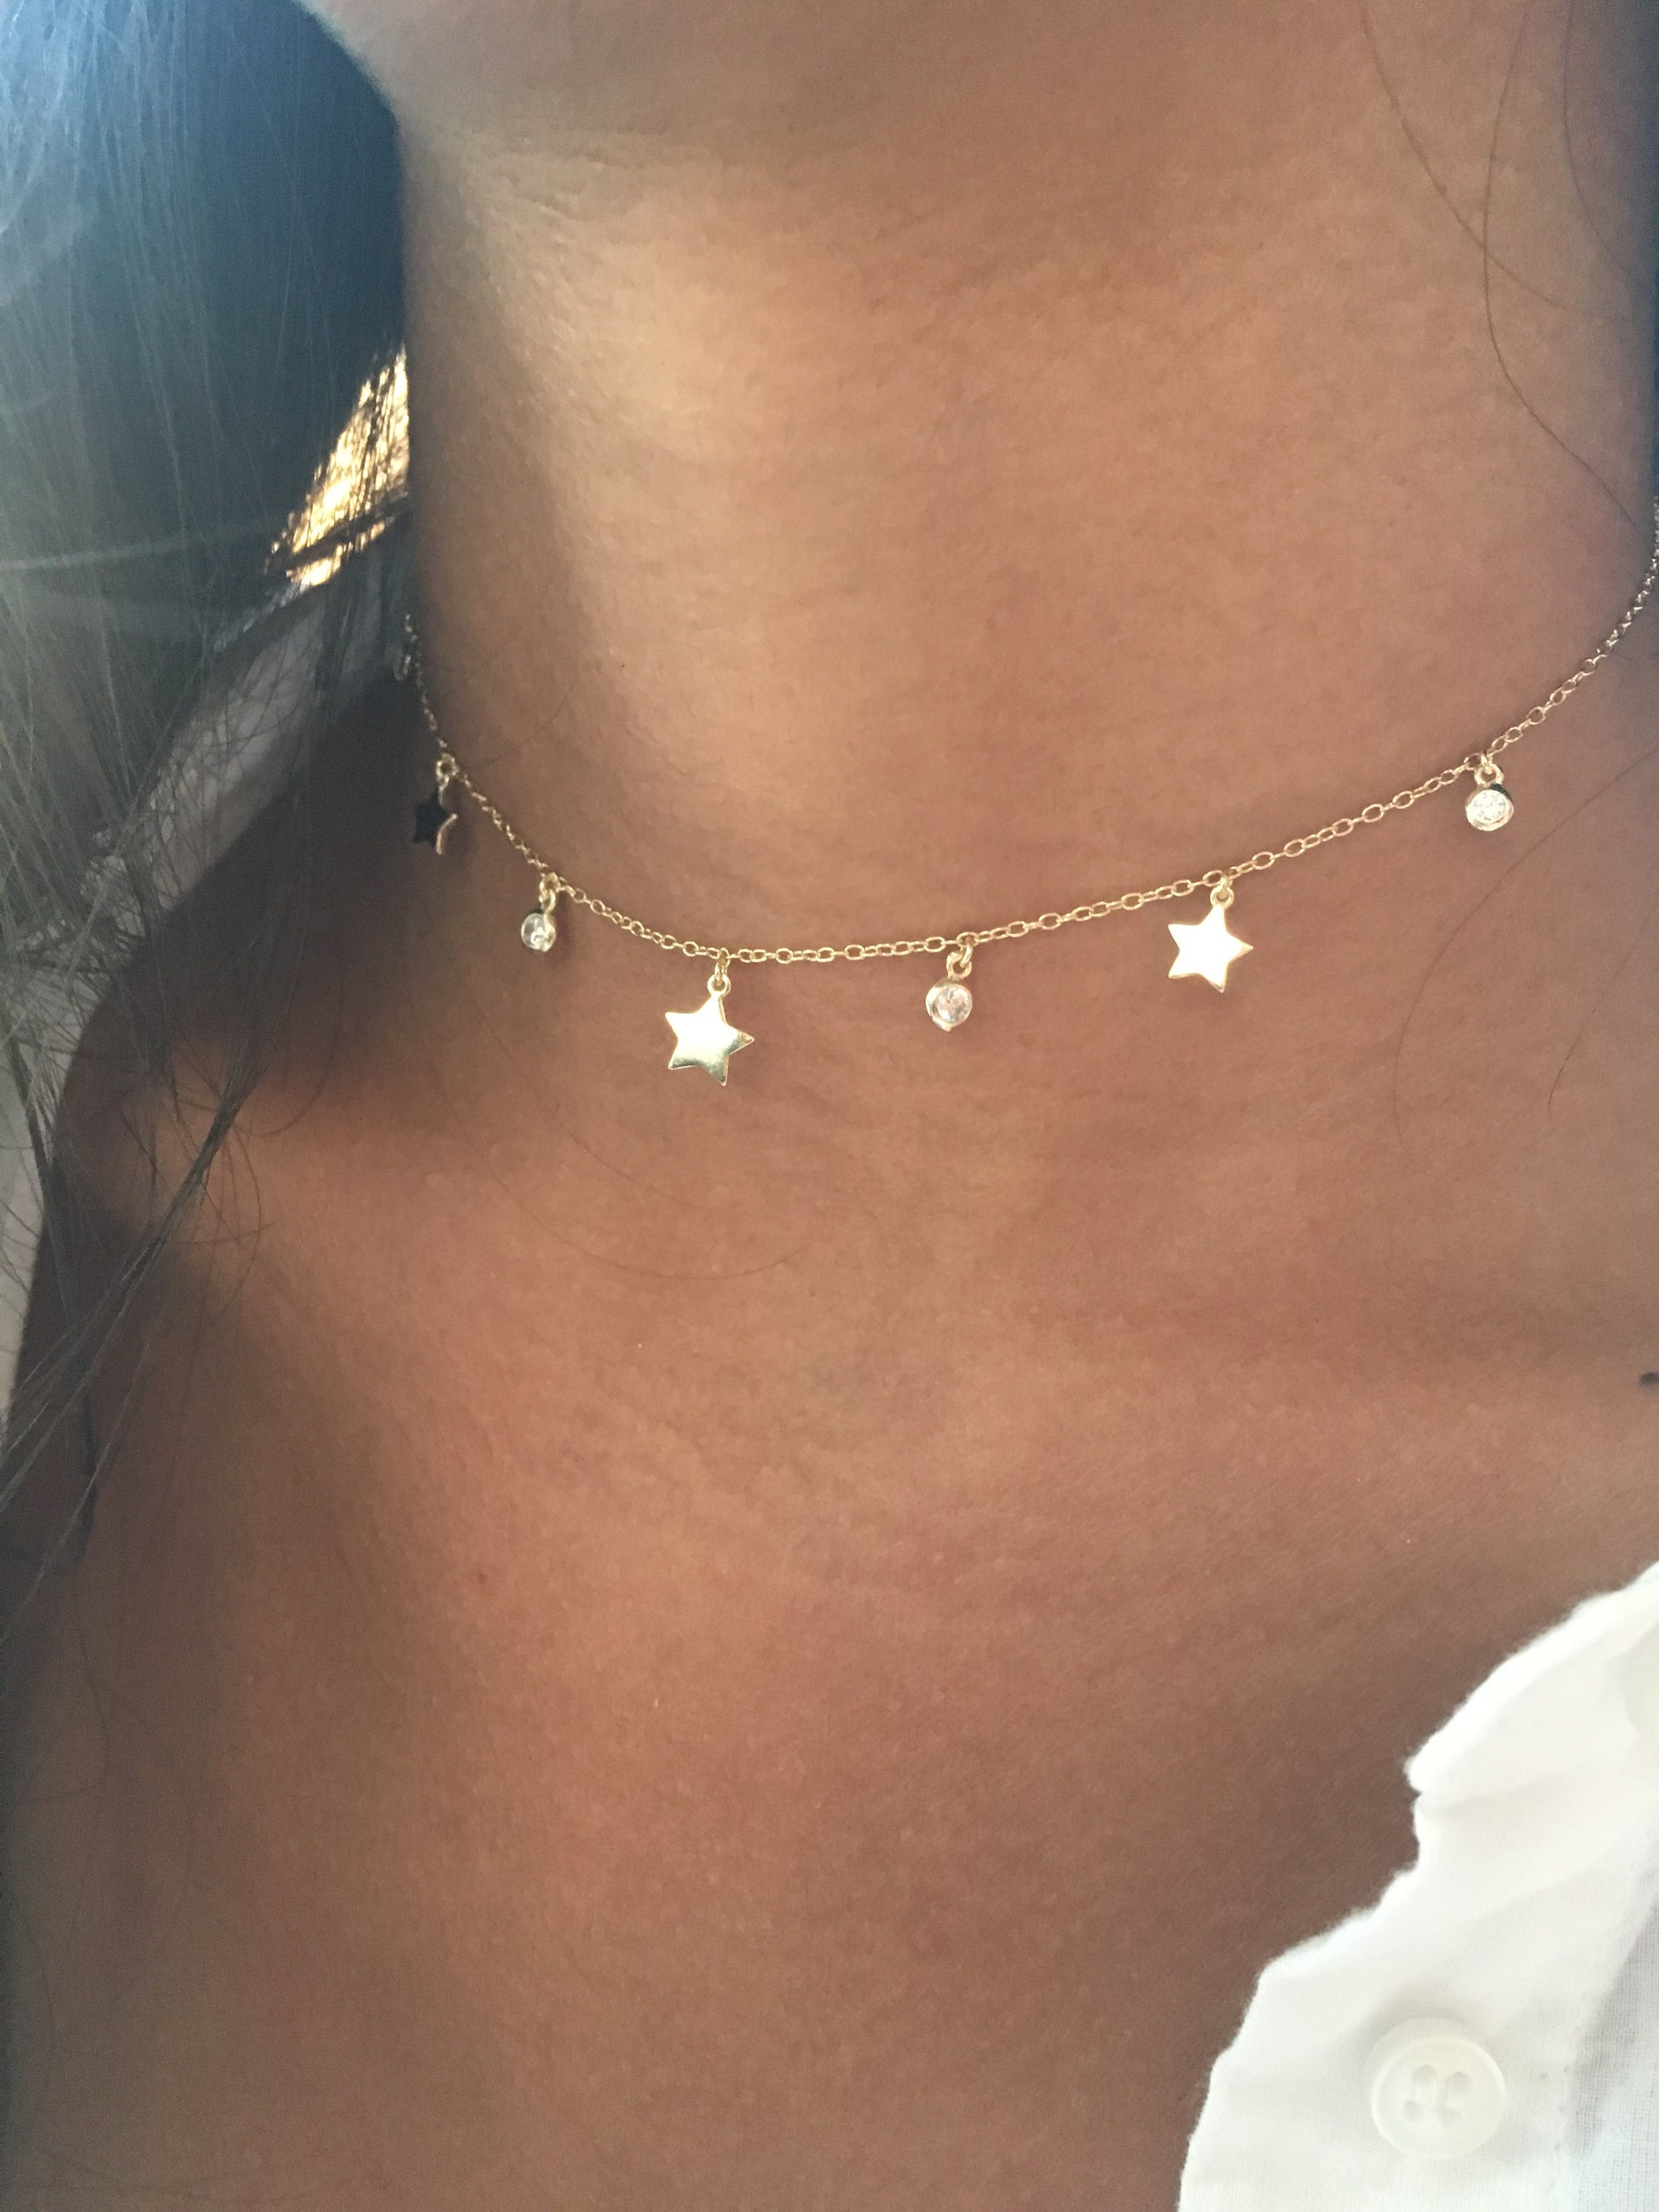 Dangling Star Choker - Retail Therapy Jewelry